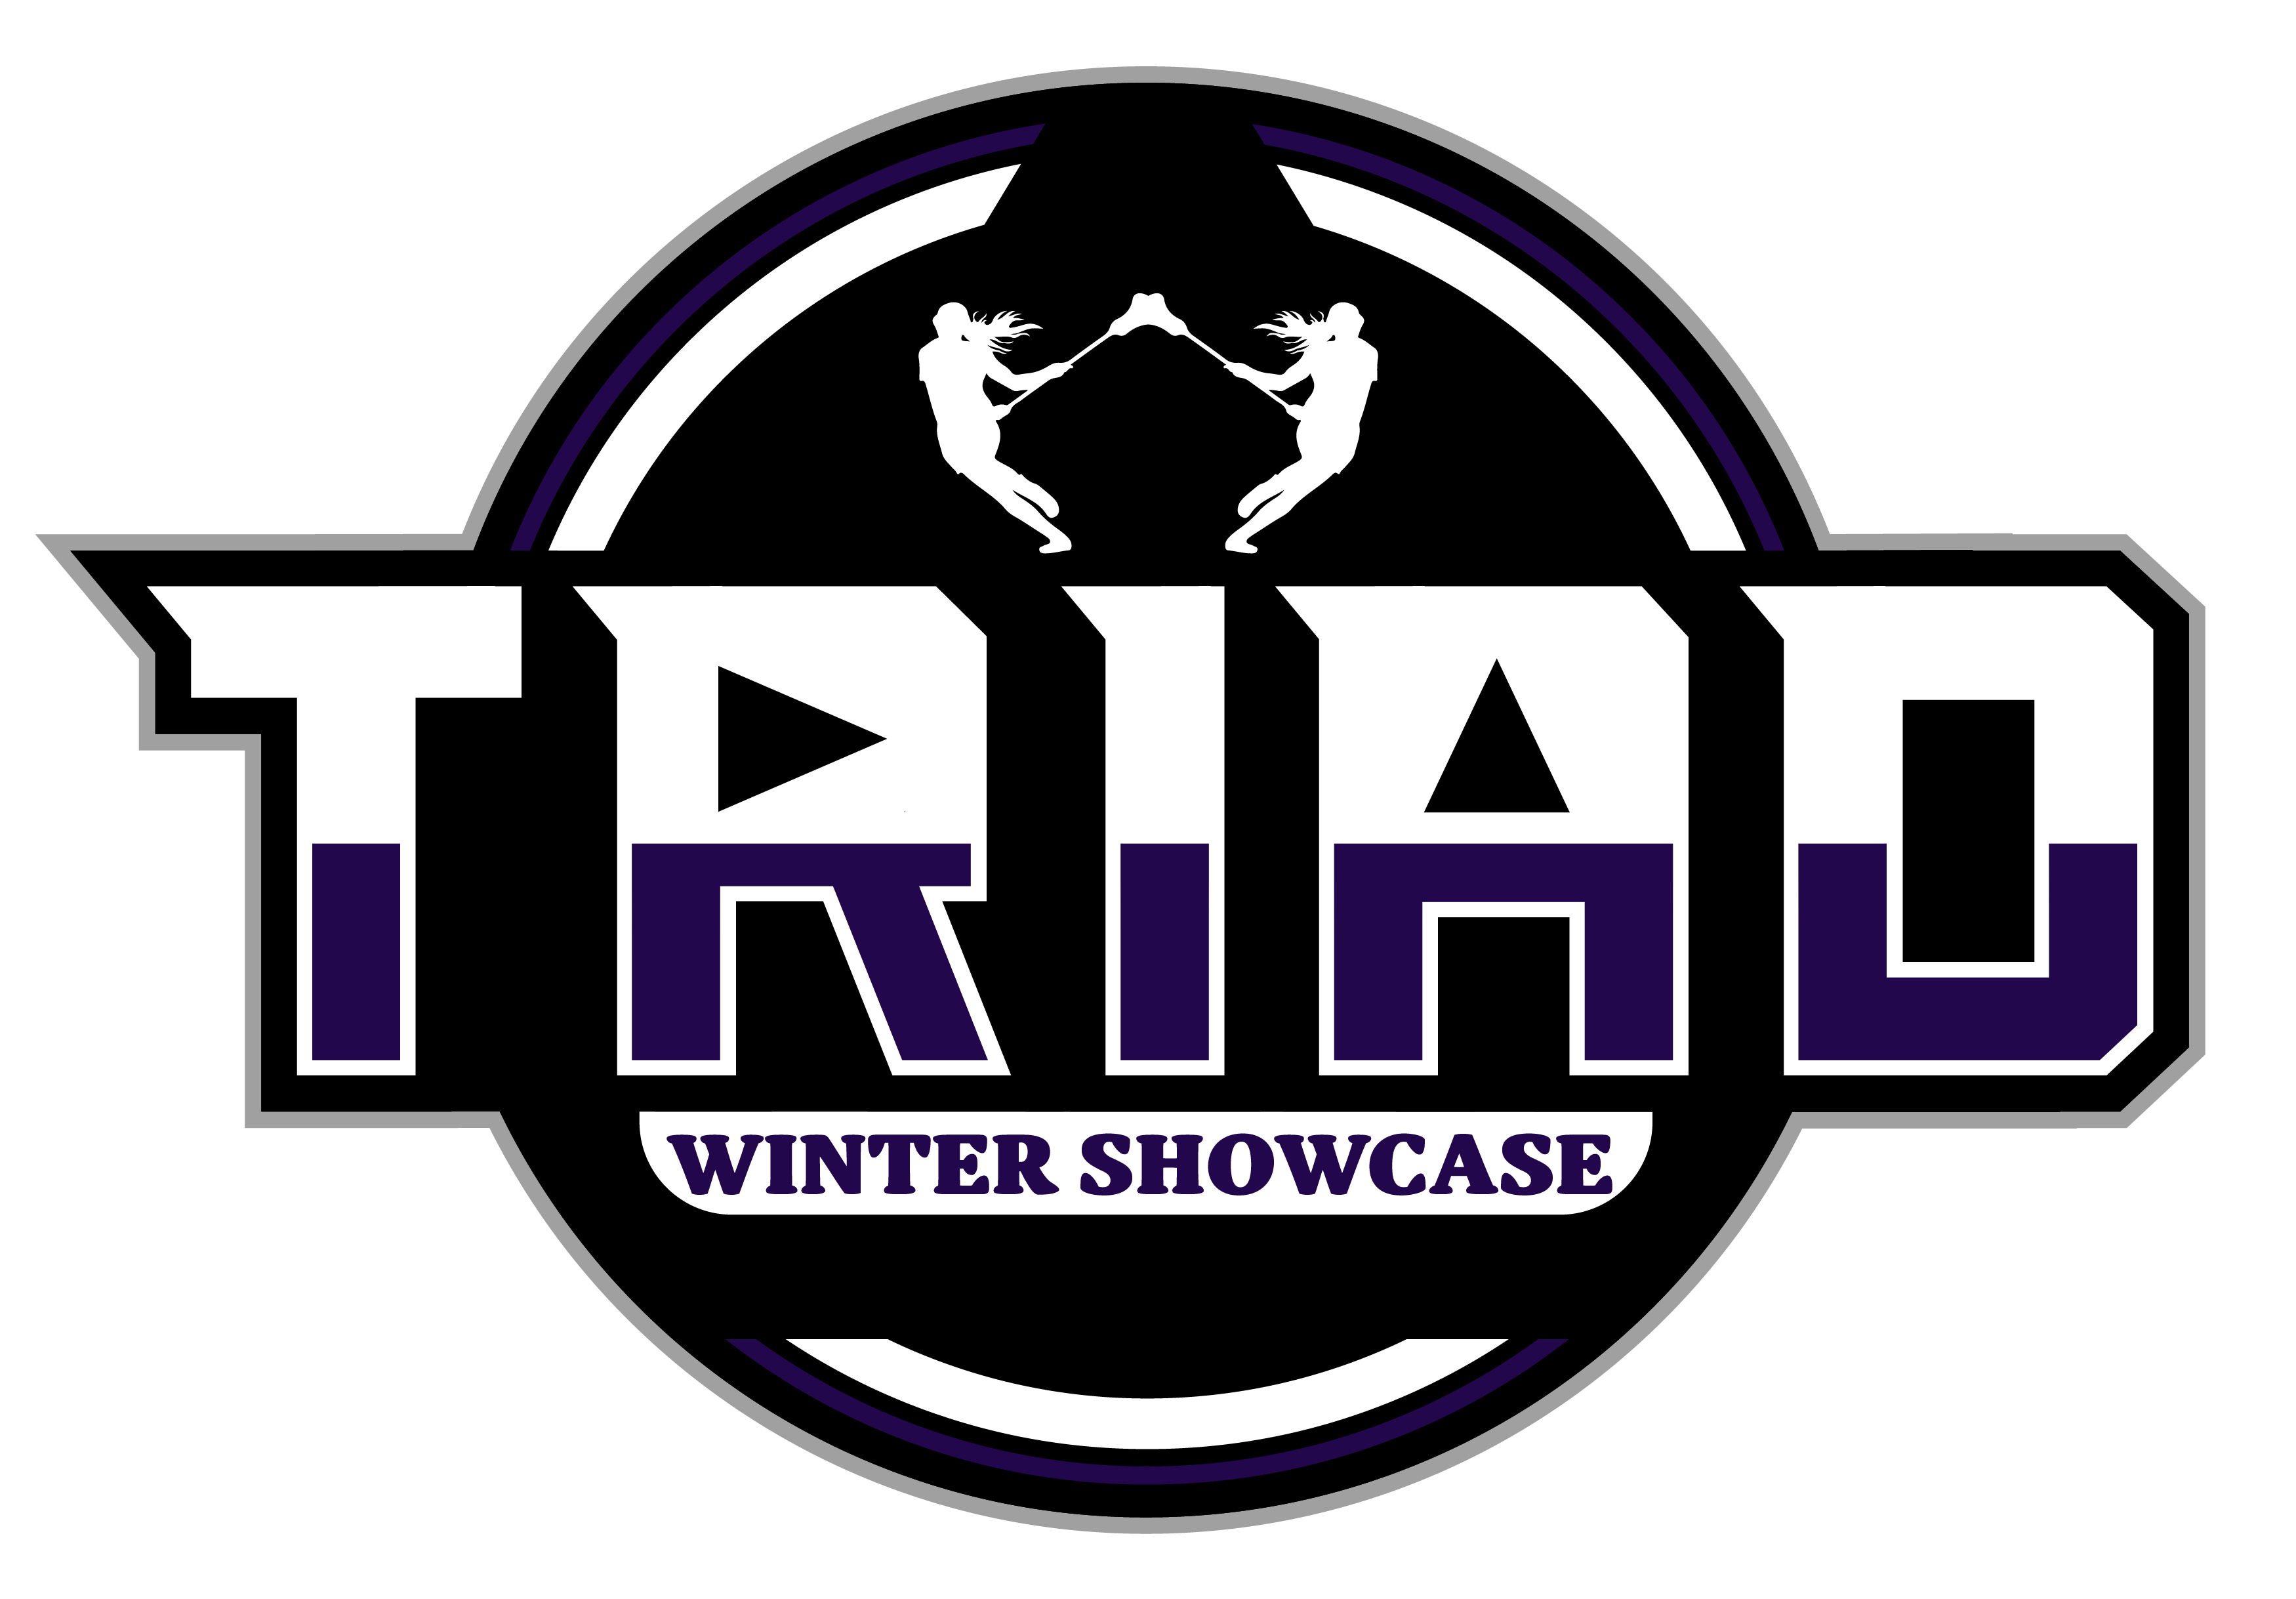 Triad Winter Showcase Girls Lacrosse